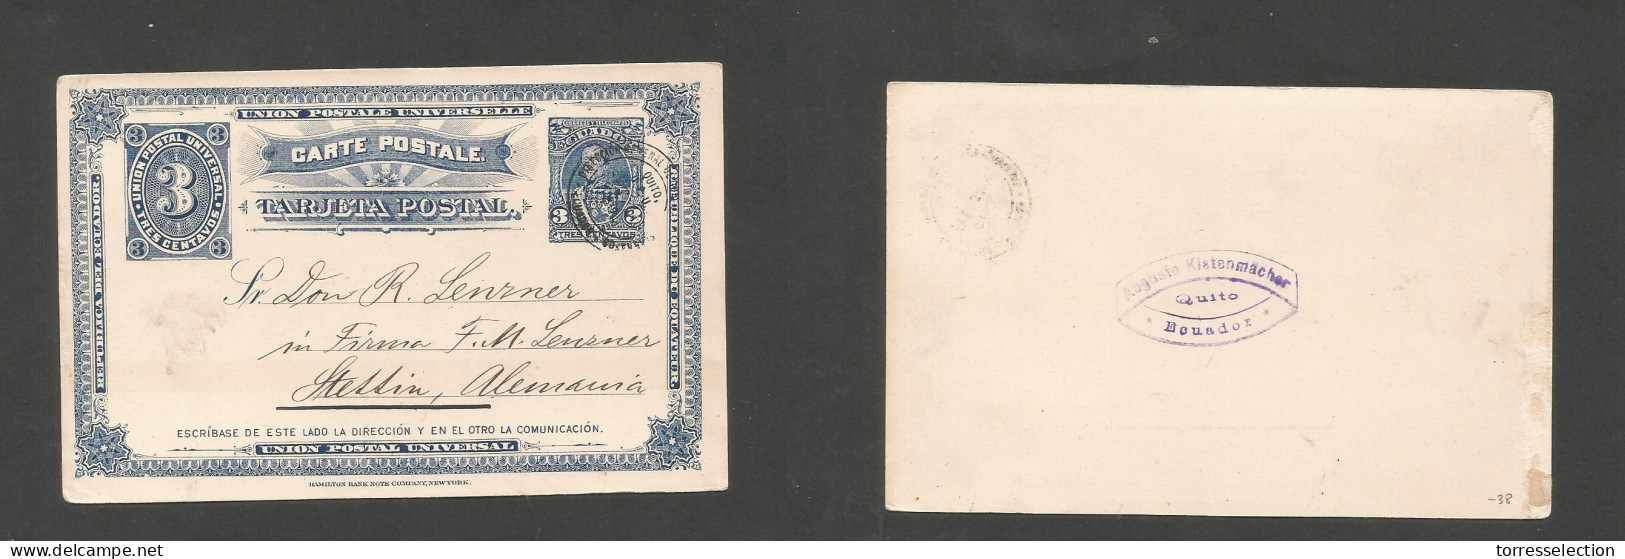 ECUADOR. C. 1896. Quito - Germany, Stettin. 3c Blue Illustrated Stat Card, Cancelled Cds. VF, Scarce Usage. - Ecuador